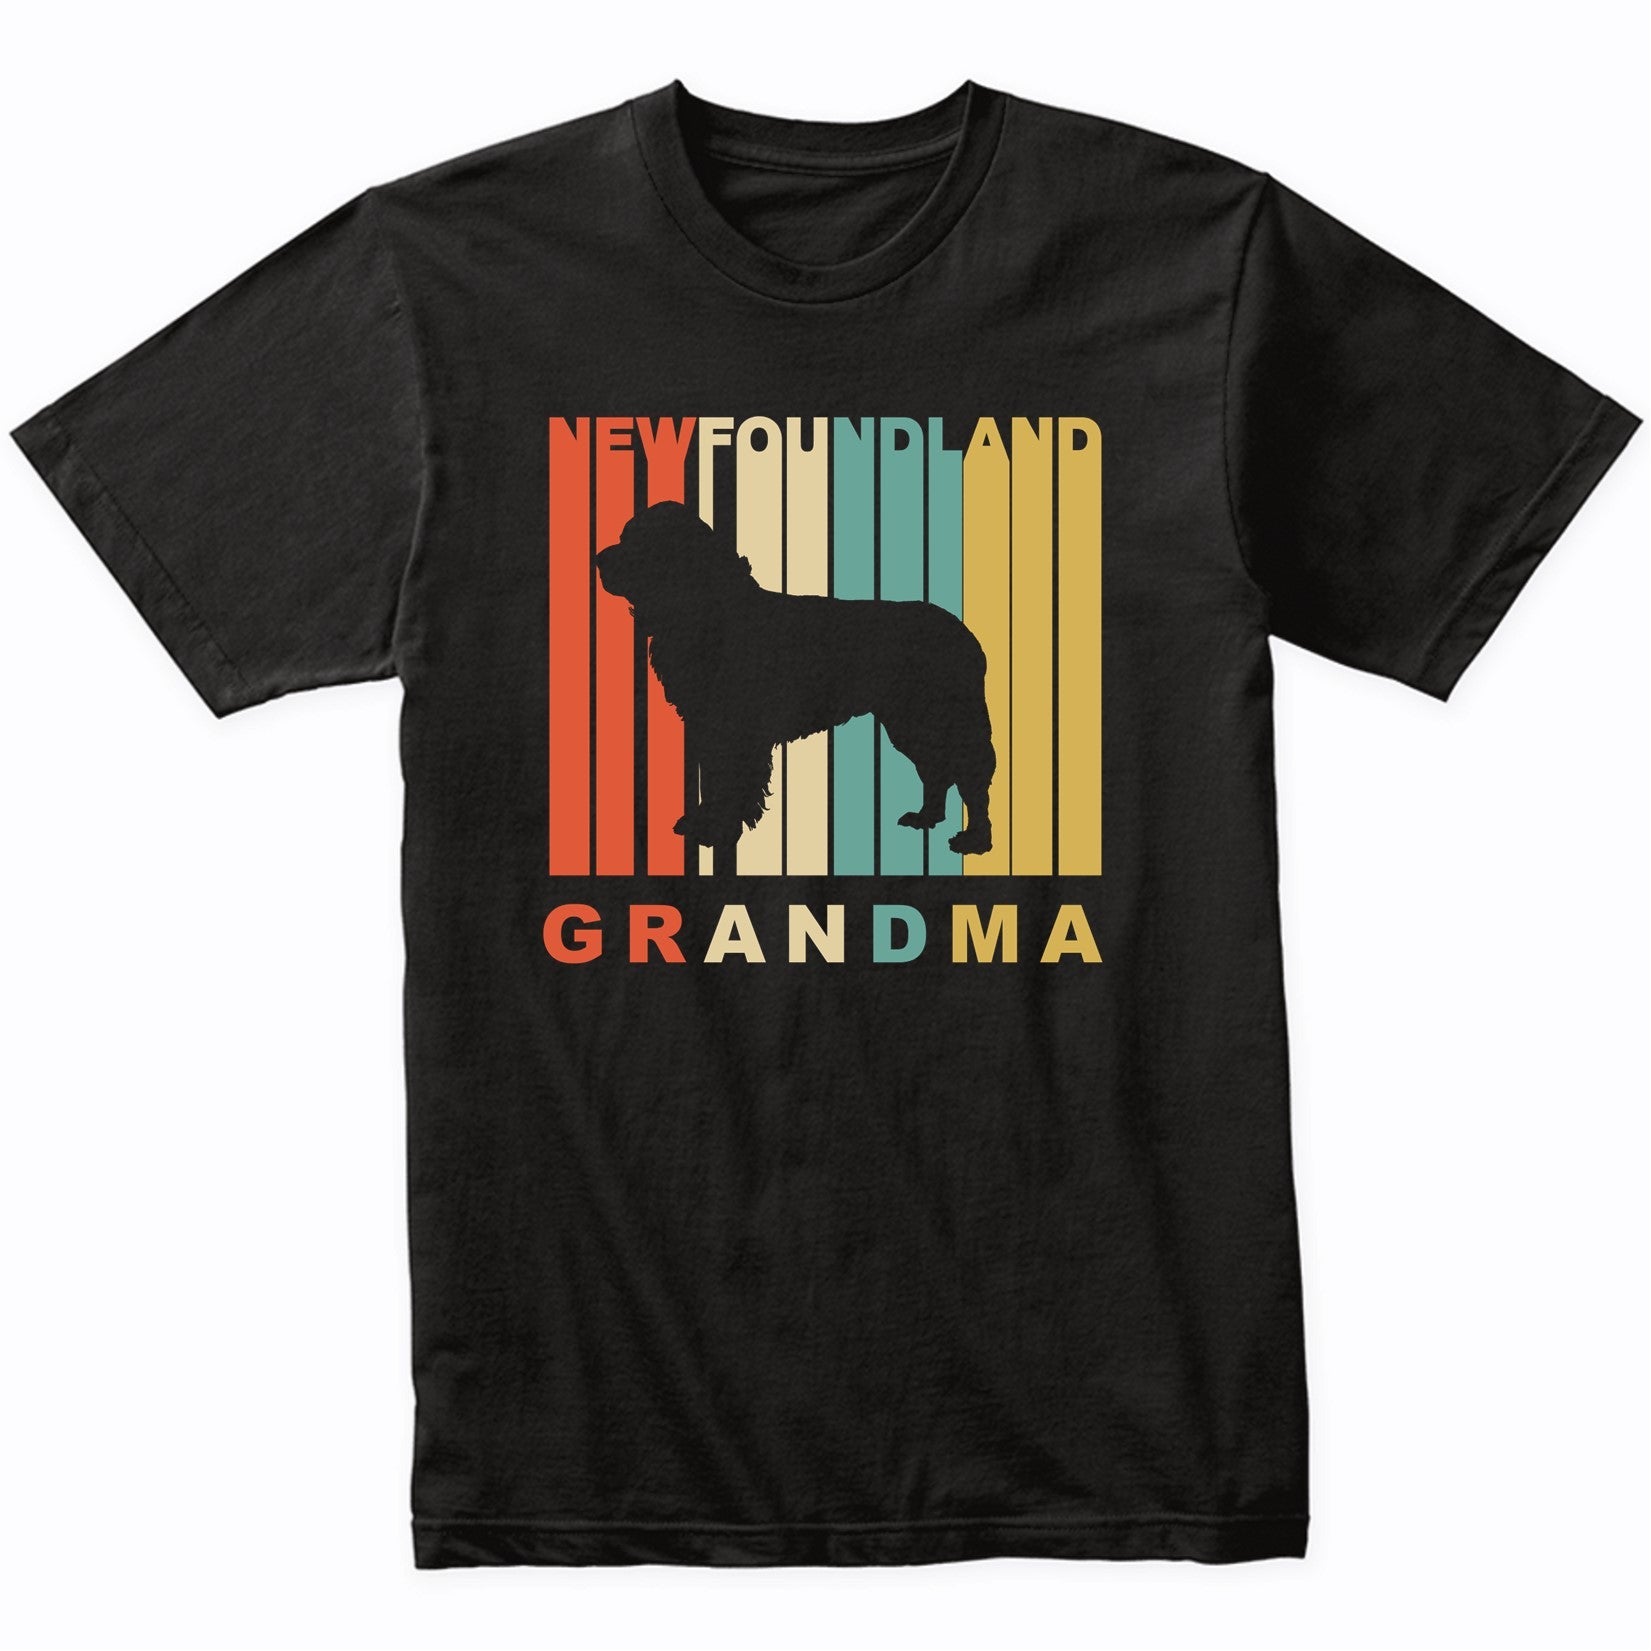 Retro Style Newfoundland Grandma Dog Grandparent T-Shirt